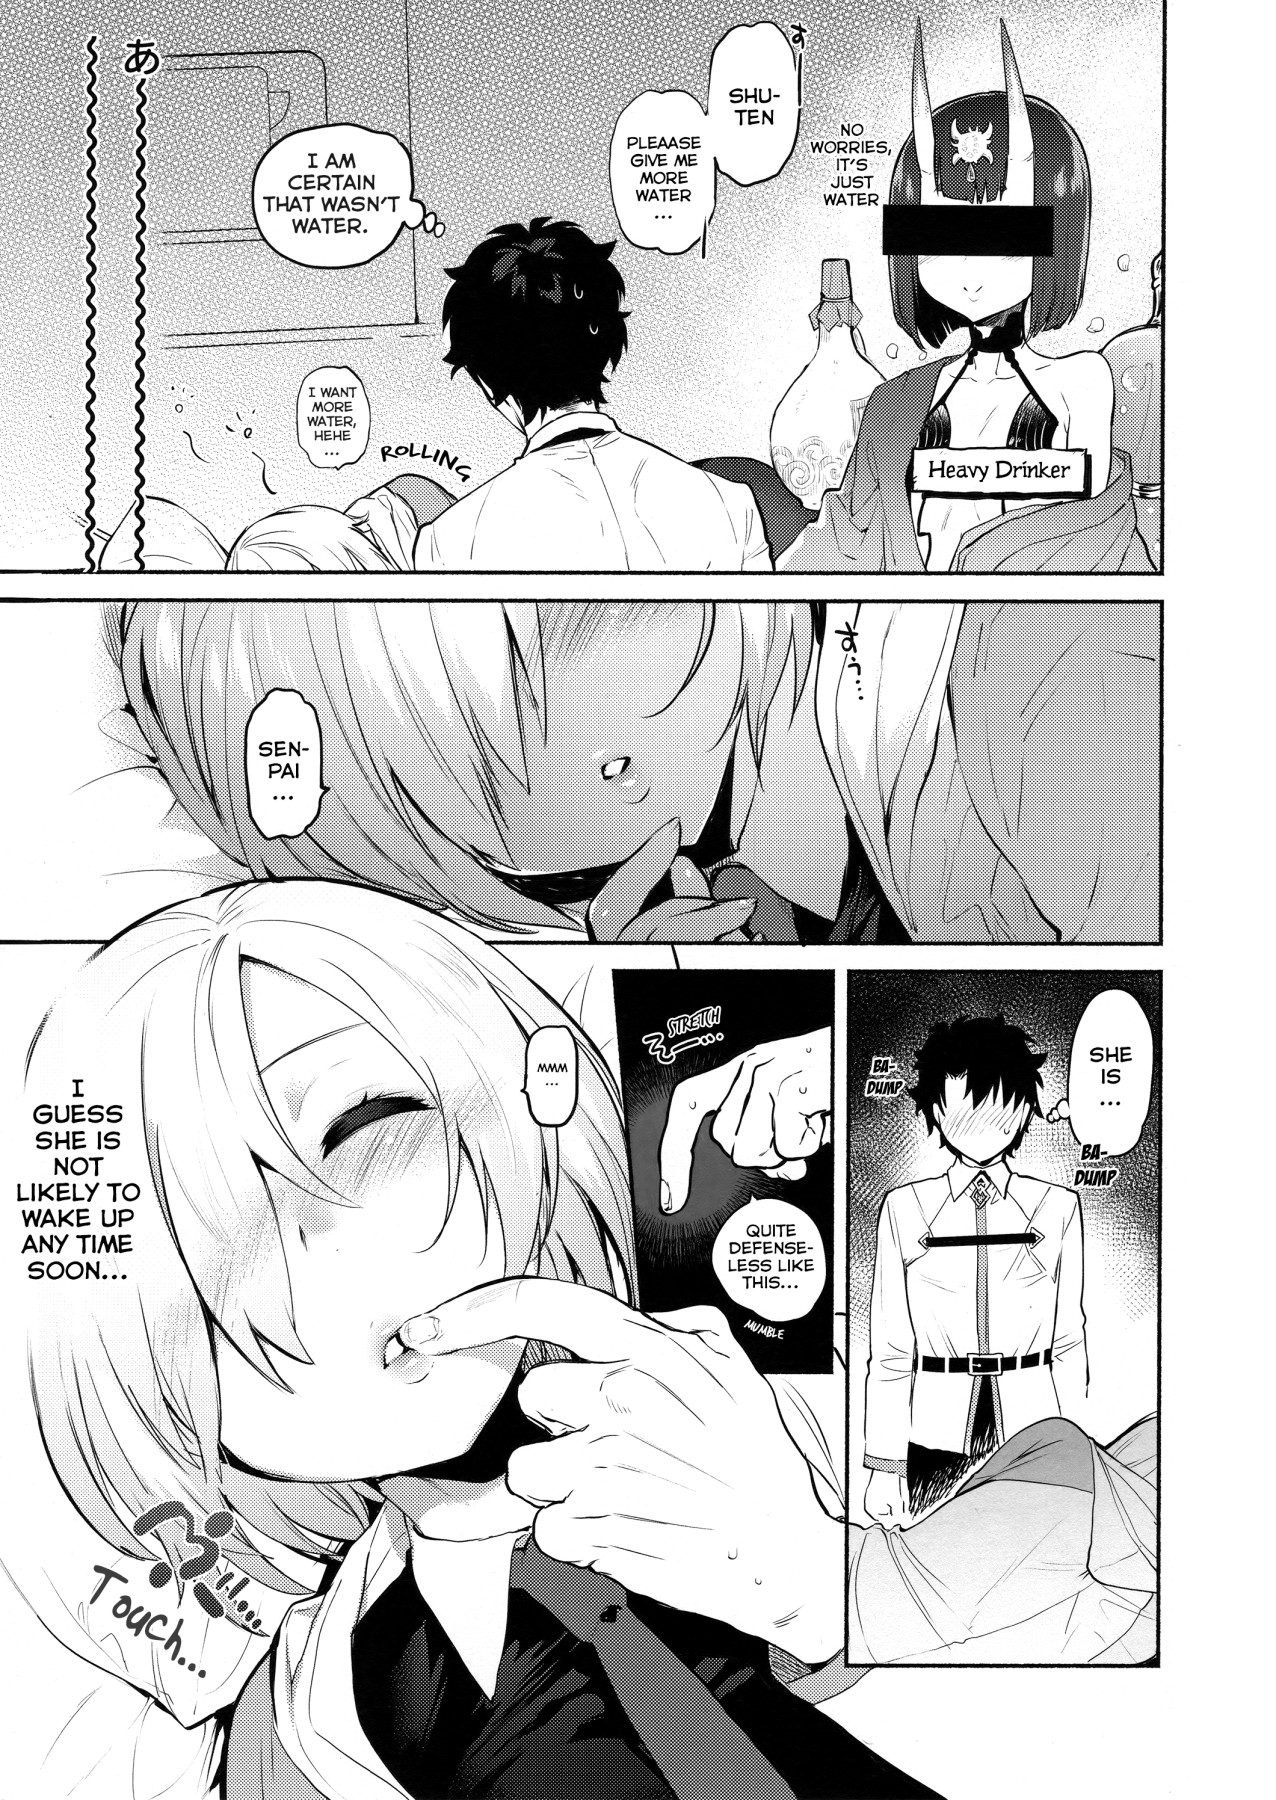 Hentai Manga Comic-Naughty Things Will Happen To Me While Sleeping...-Read-3